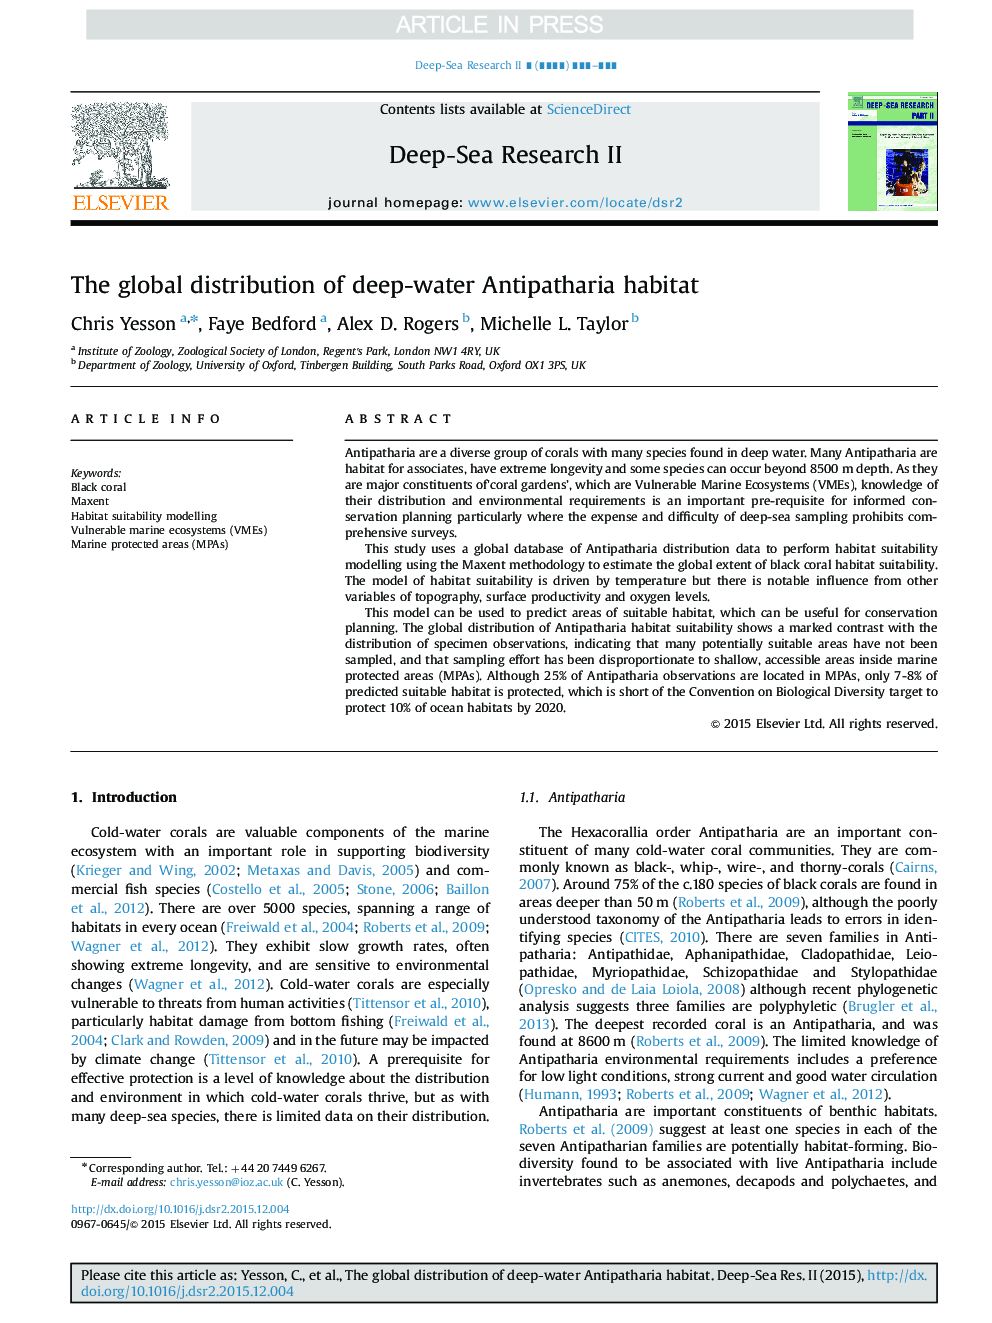 The global distribution of deep-water Antipatharia habitat